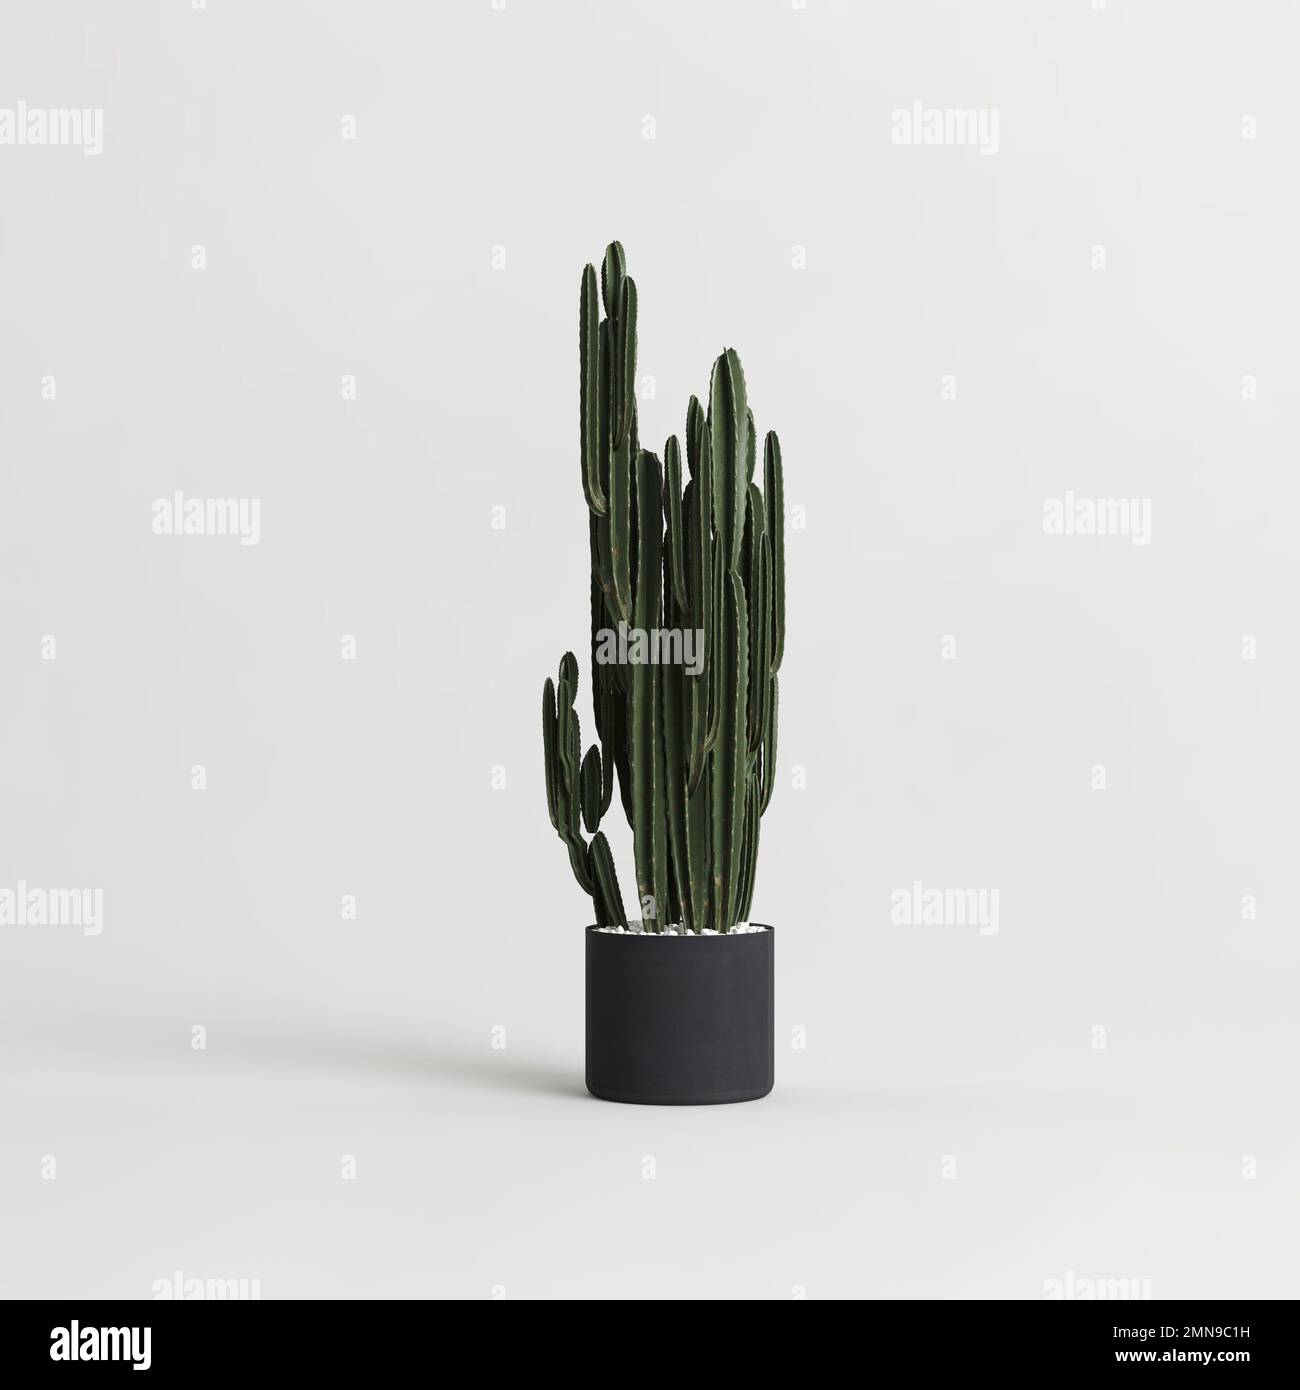 3d illustration of house plant isolated on white background Stock Photo